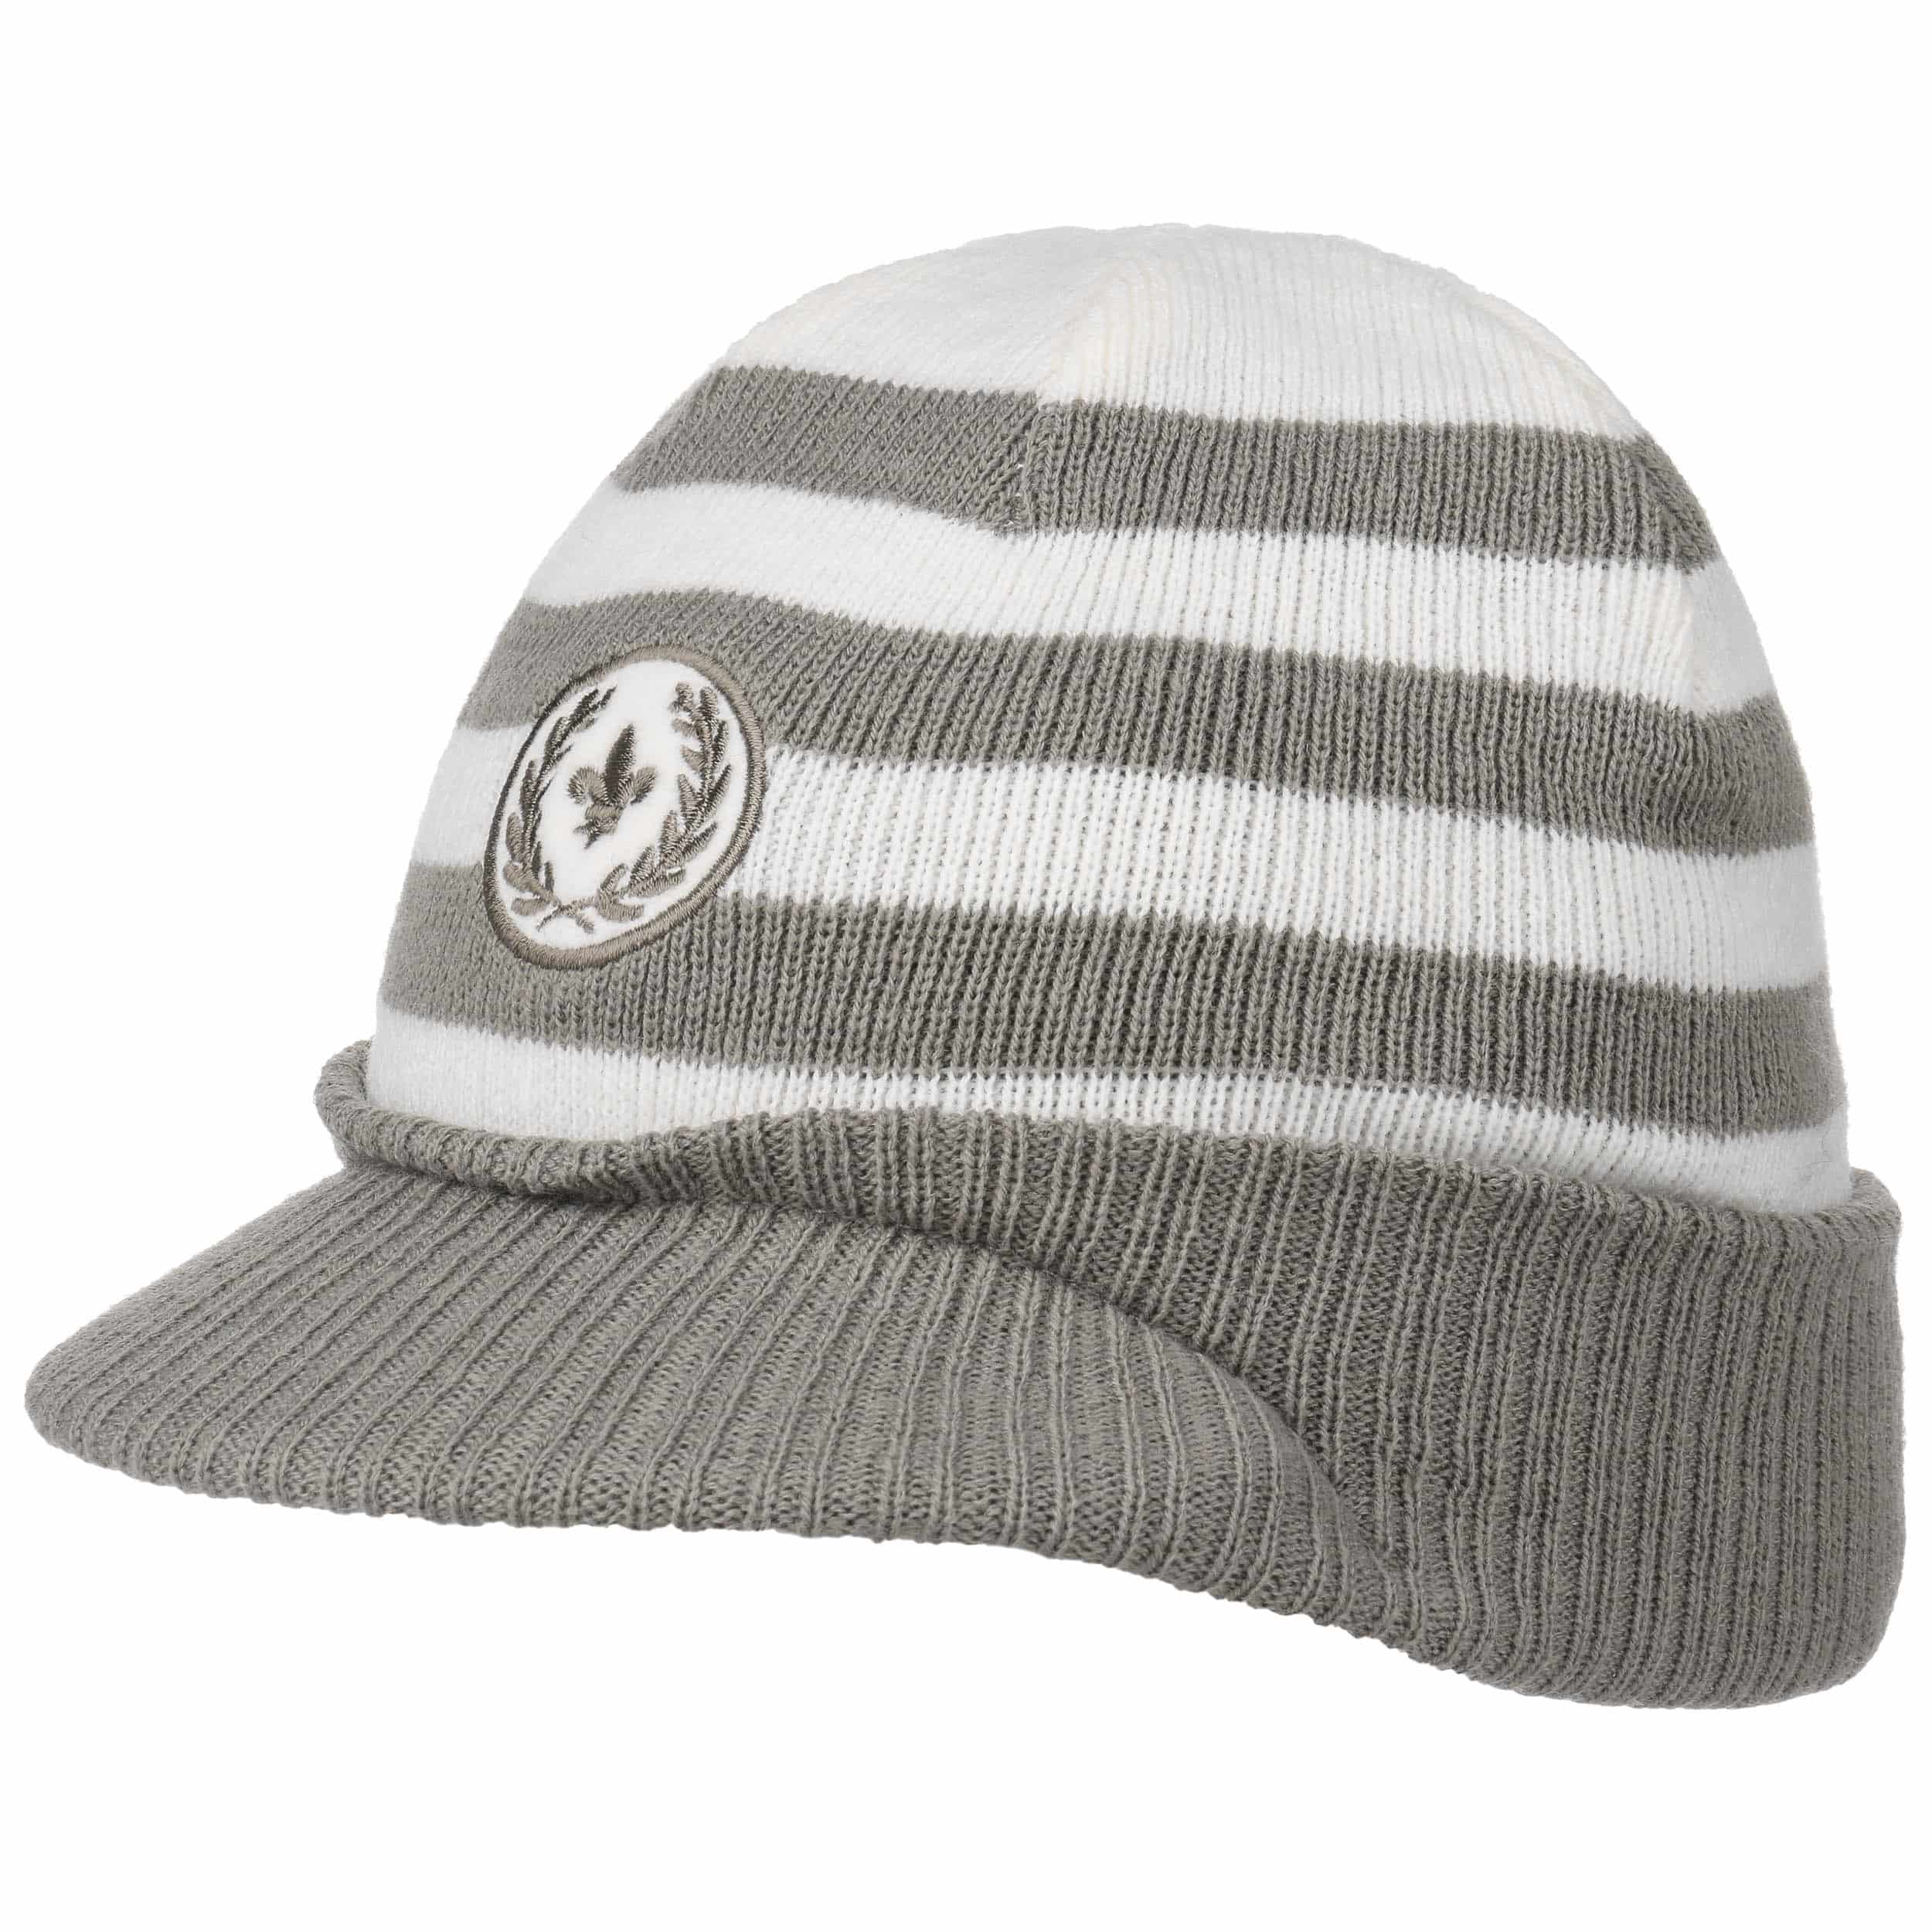 knitted peak cap